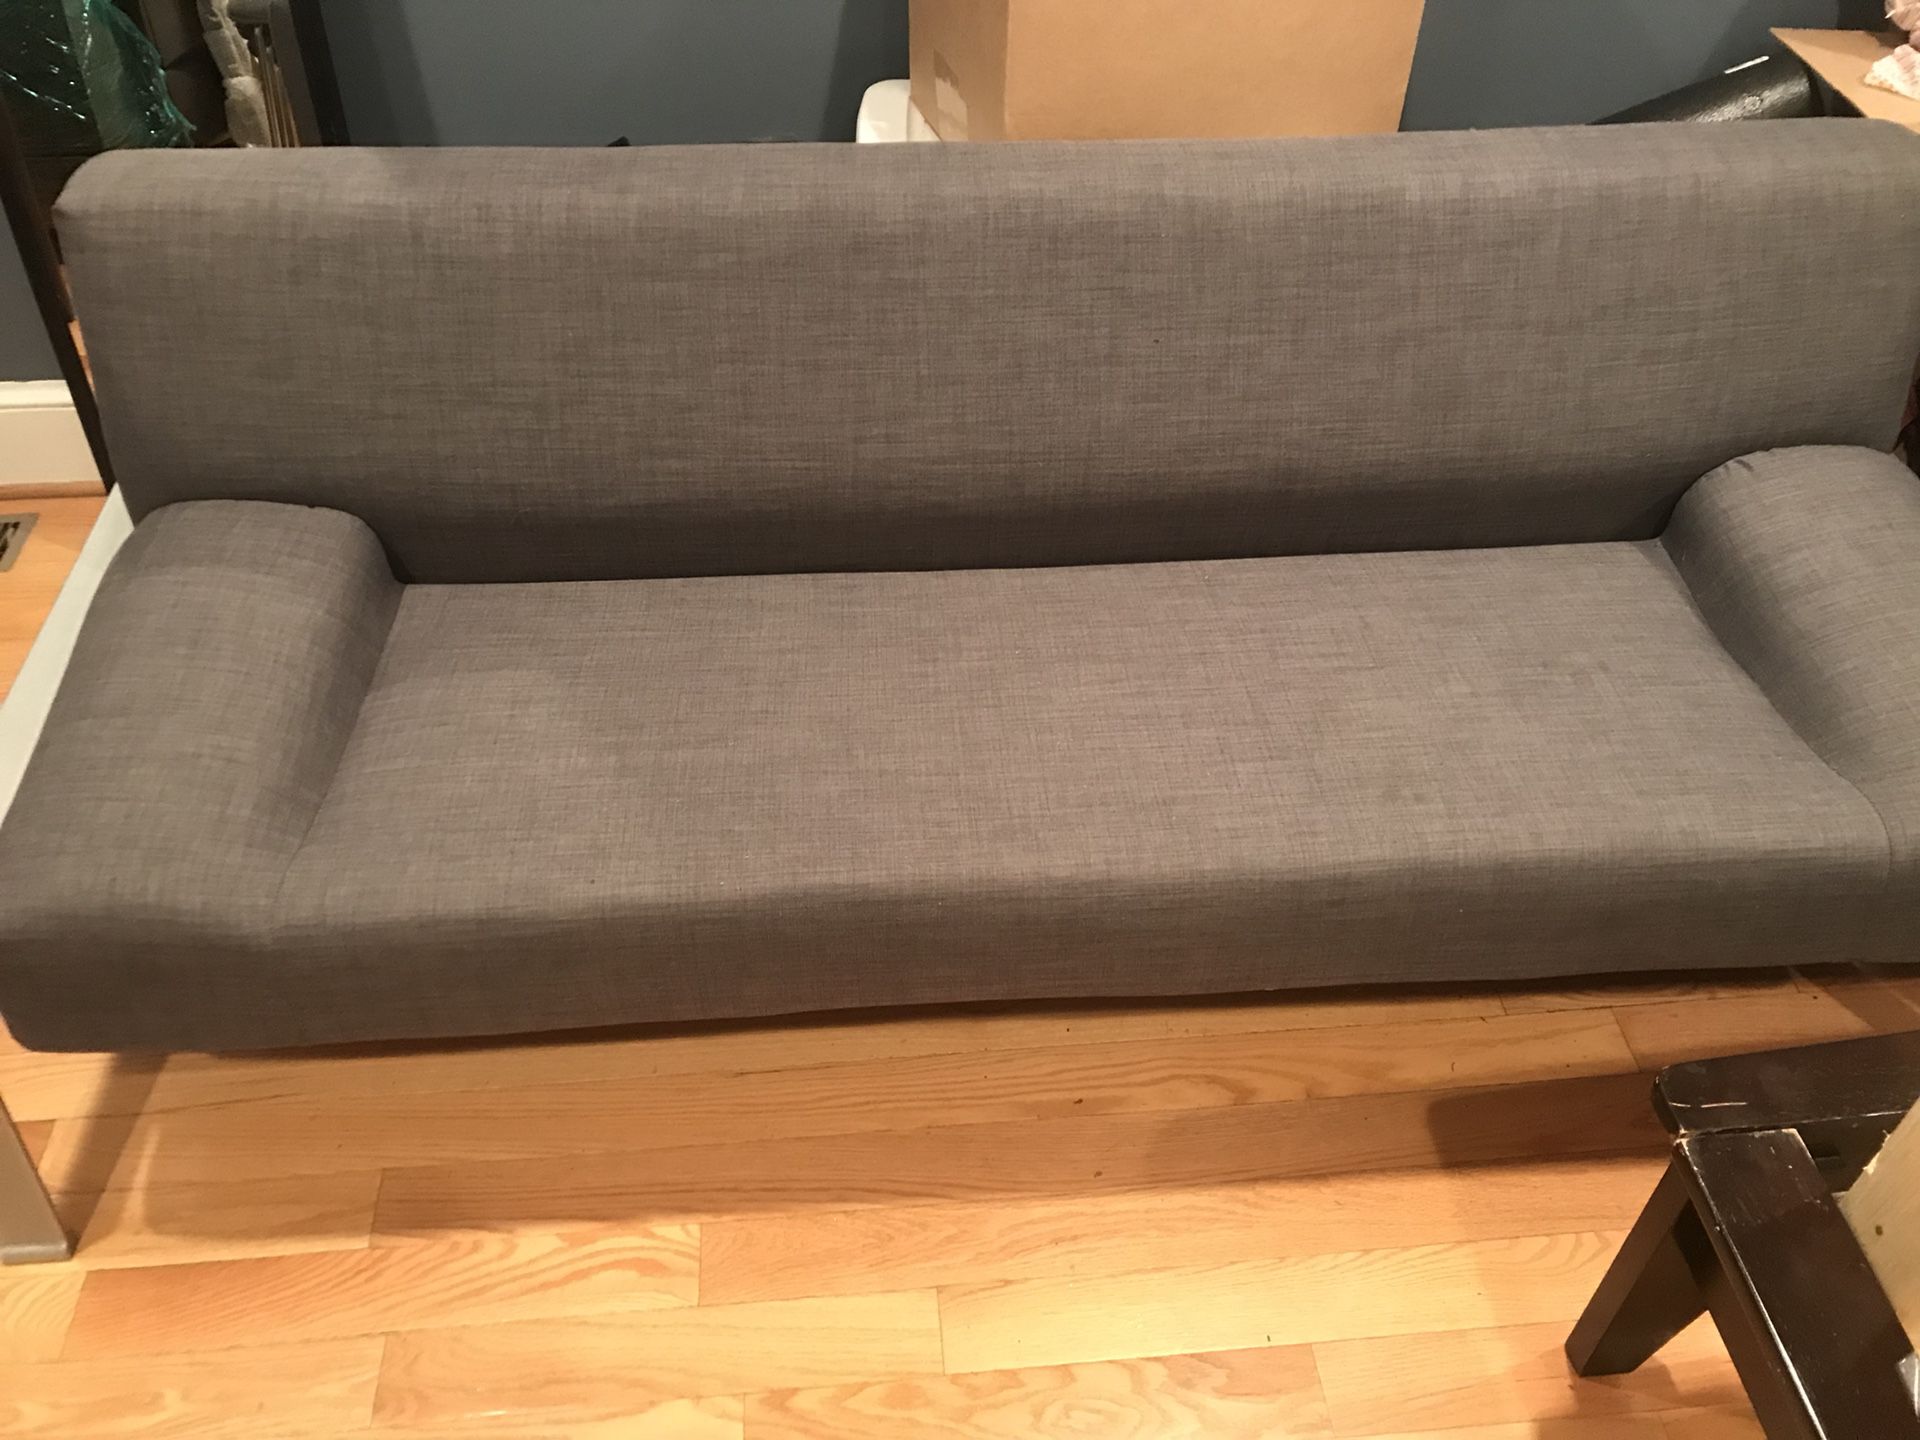 Ikea Sleeper Sofa - Like NEW!